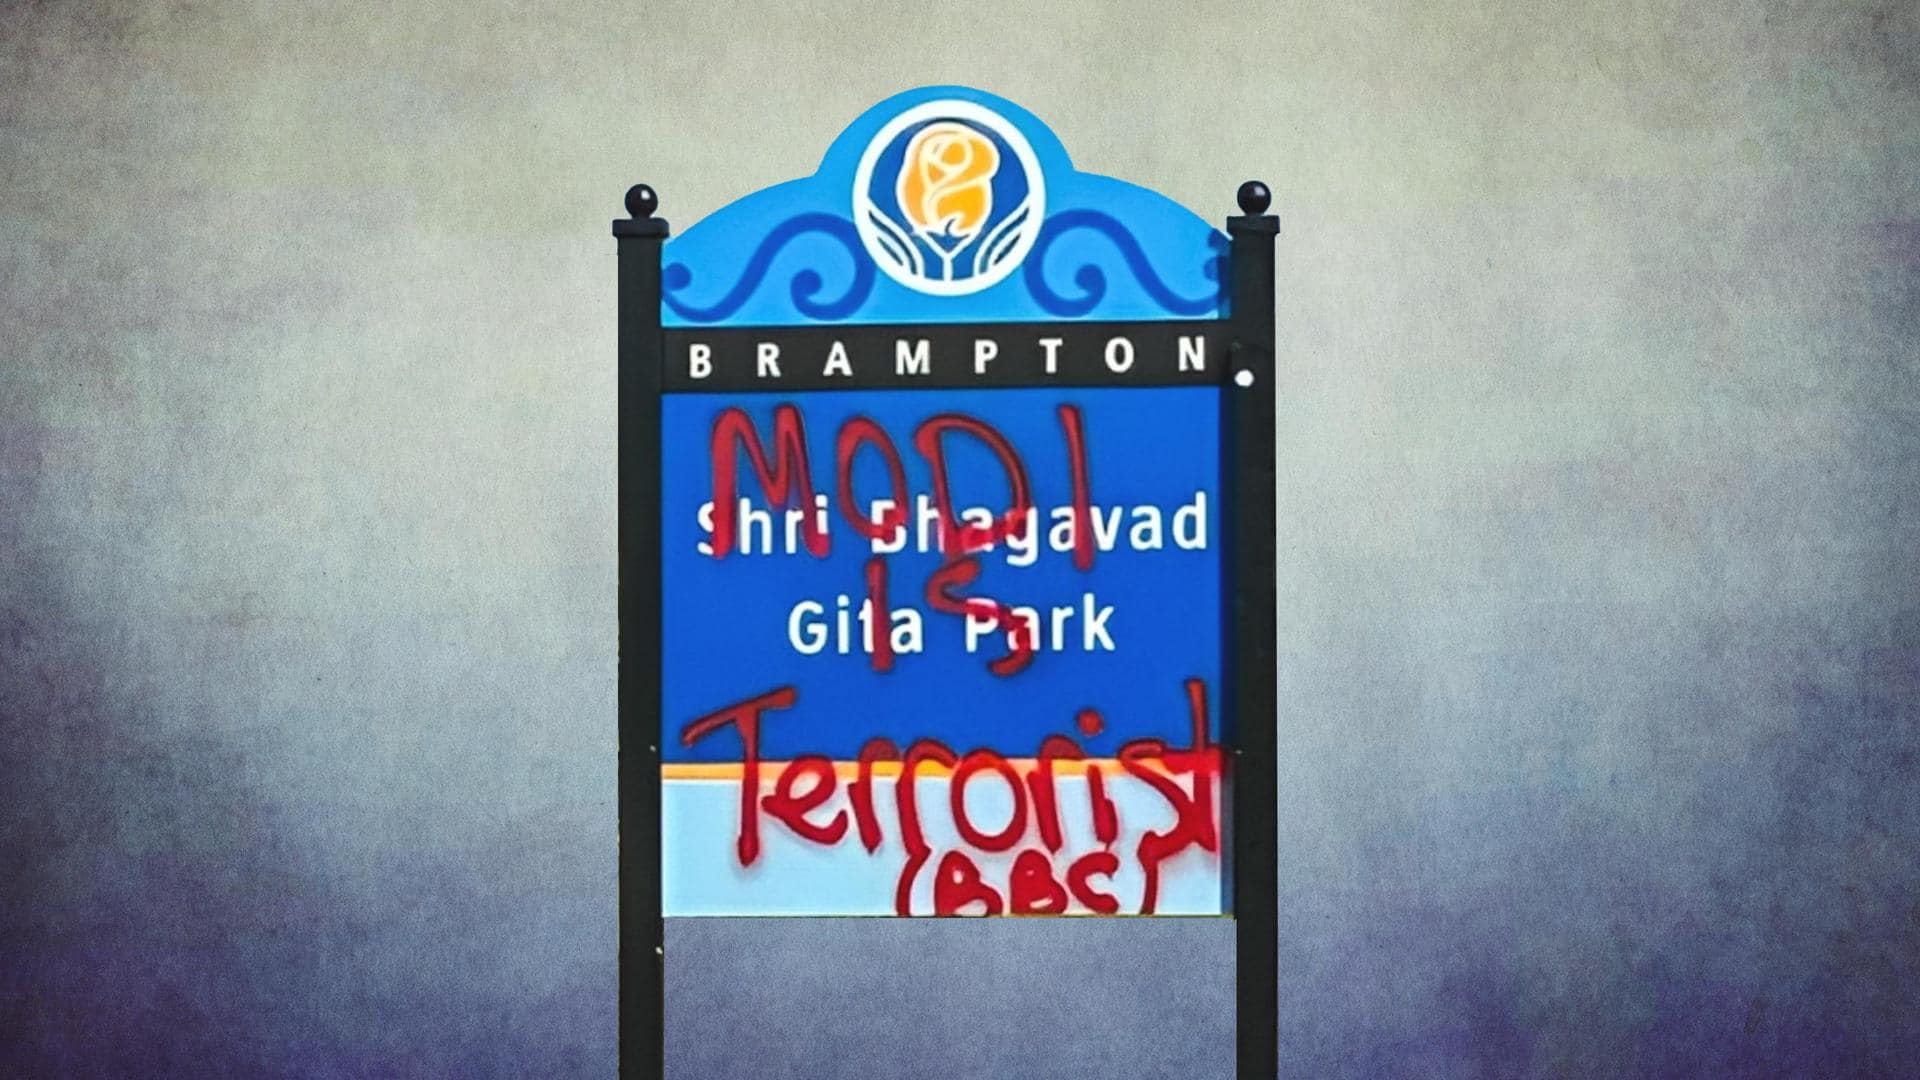 Canada: Bhagavad Gita Park signage damaged, defaced with anti-Modi graffiti 